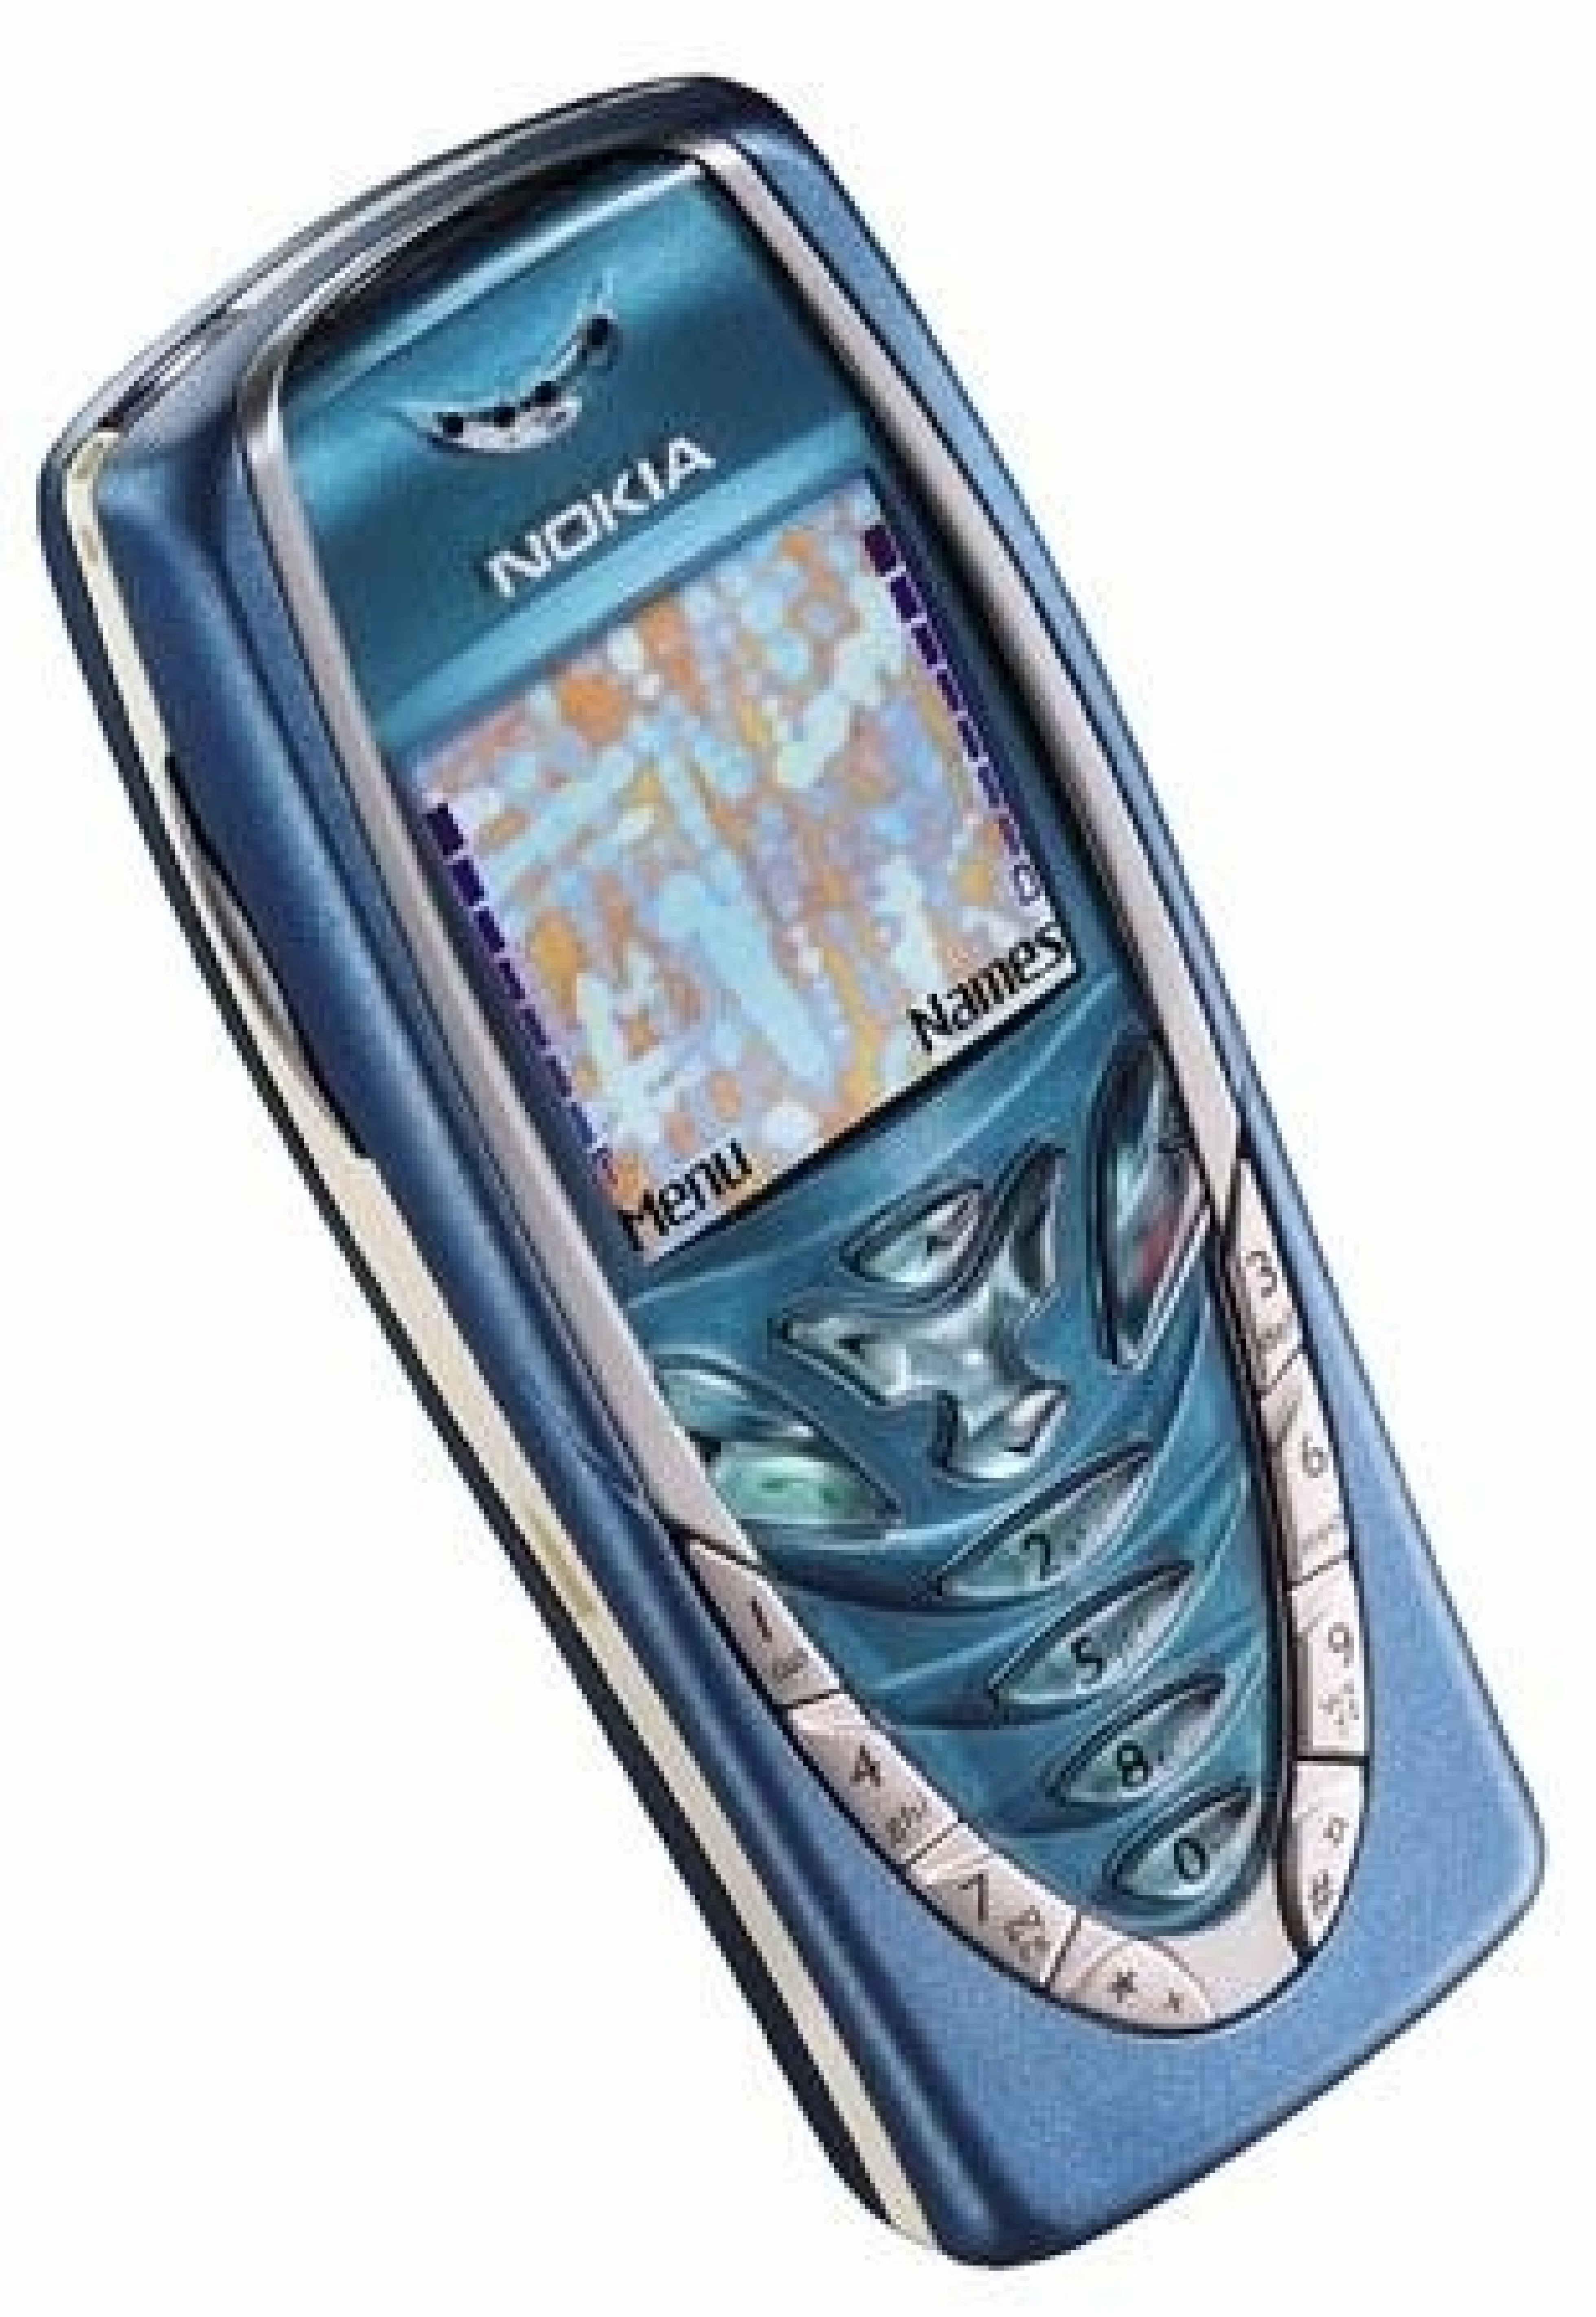 Nokia 7210 Supernova - Mobile Phone Specifications & Price - GadgetsRealm